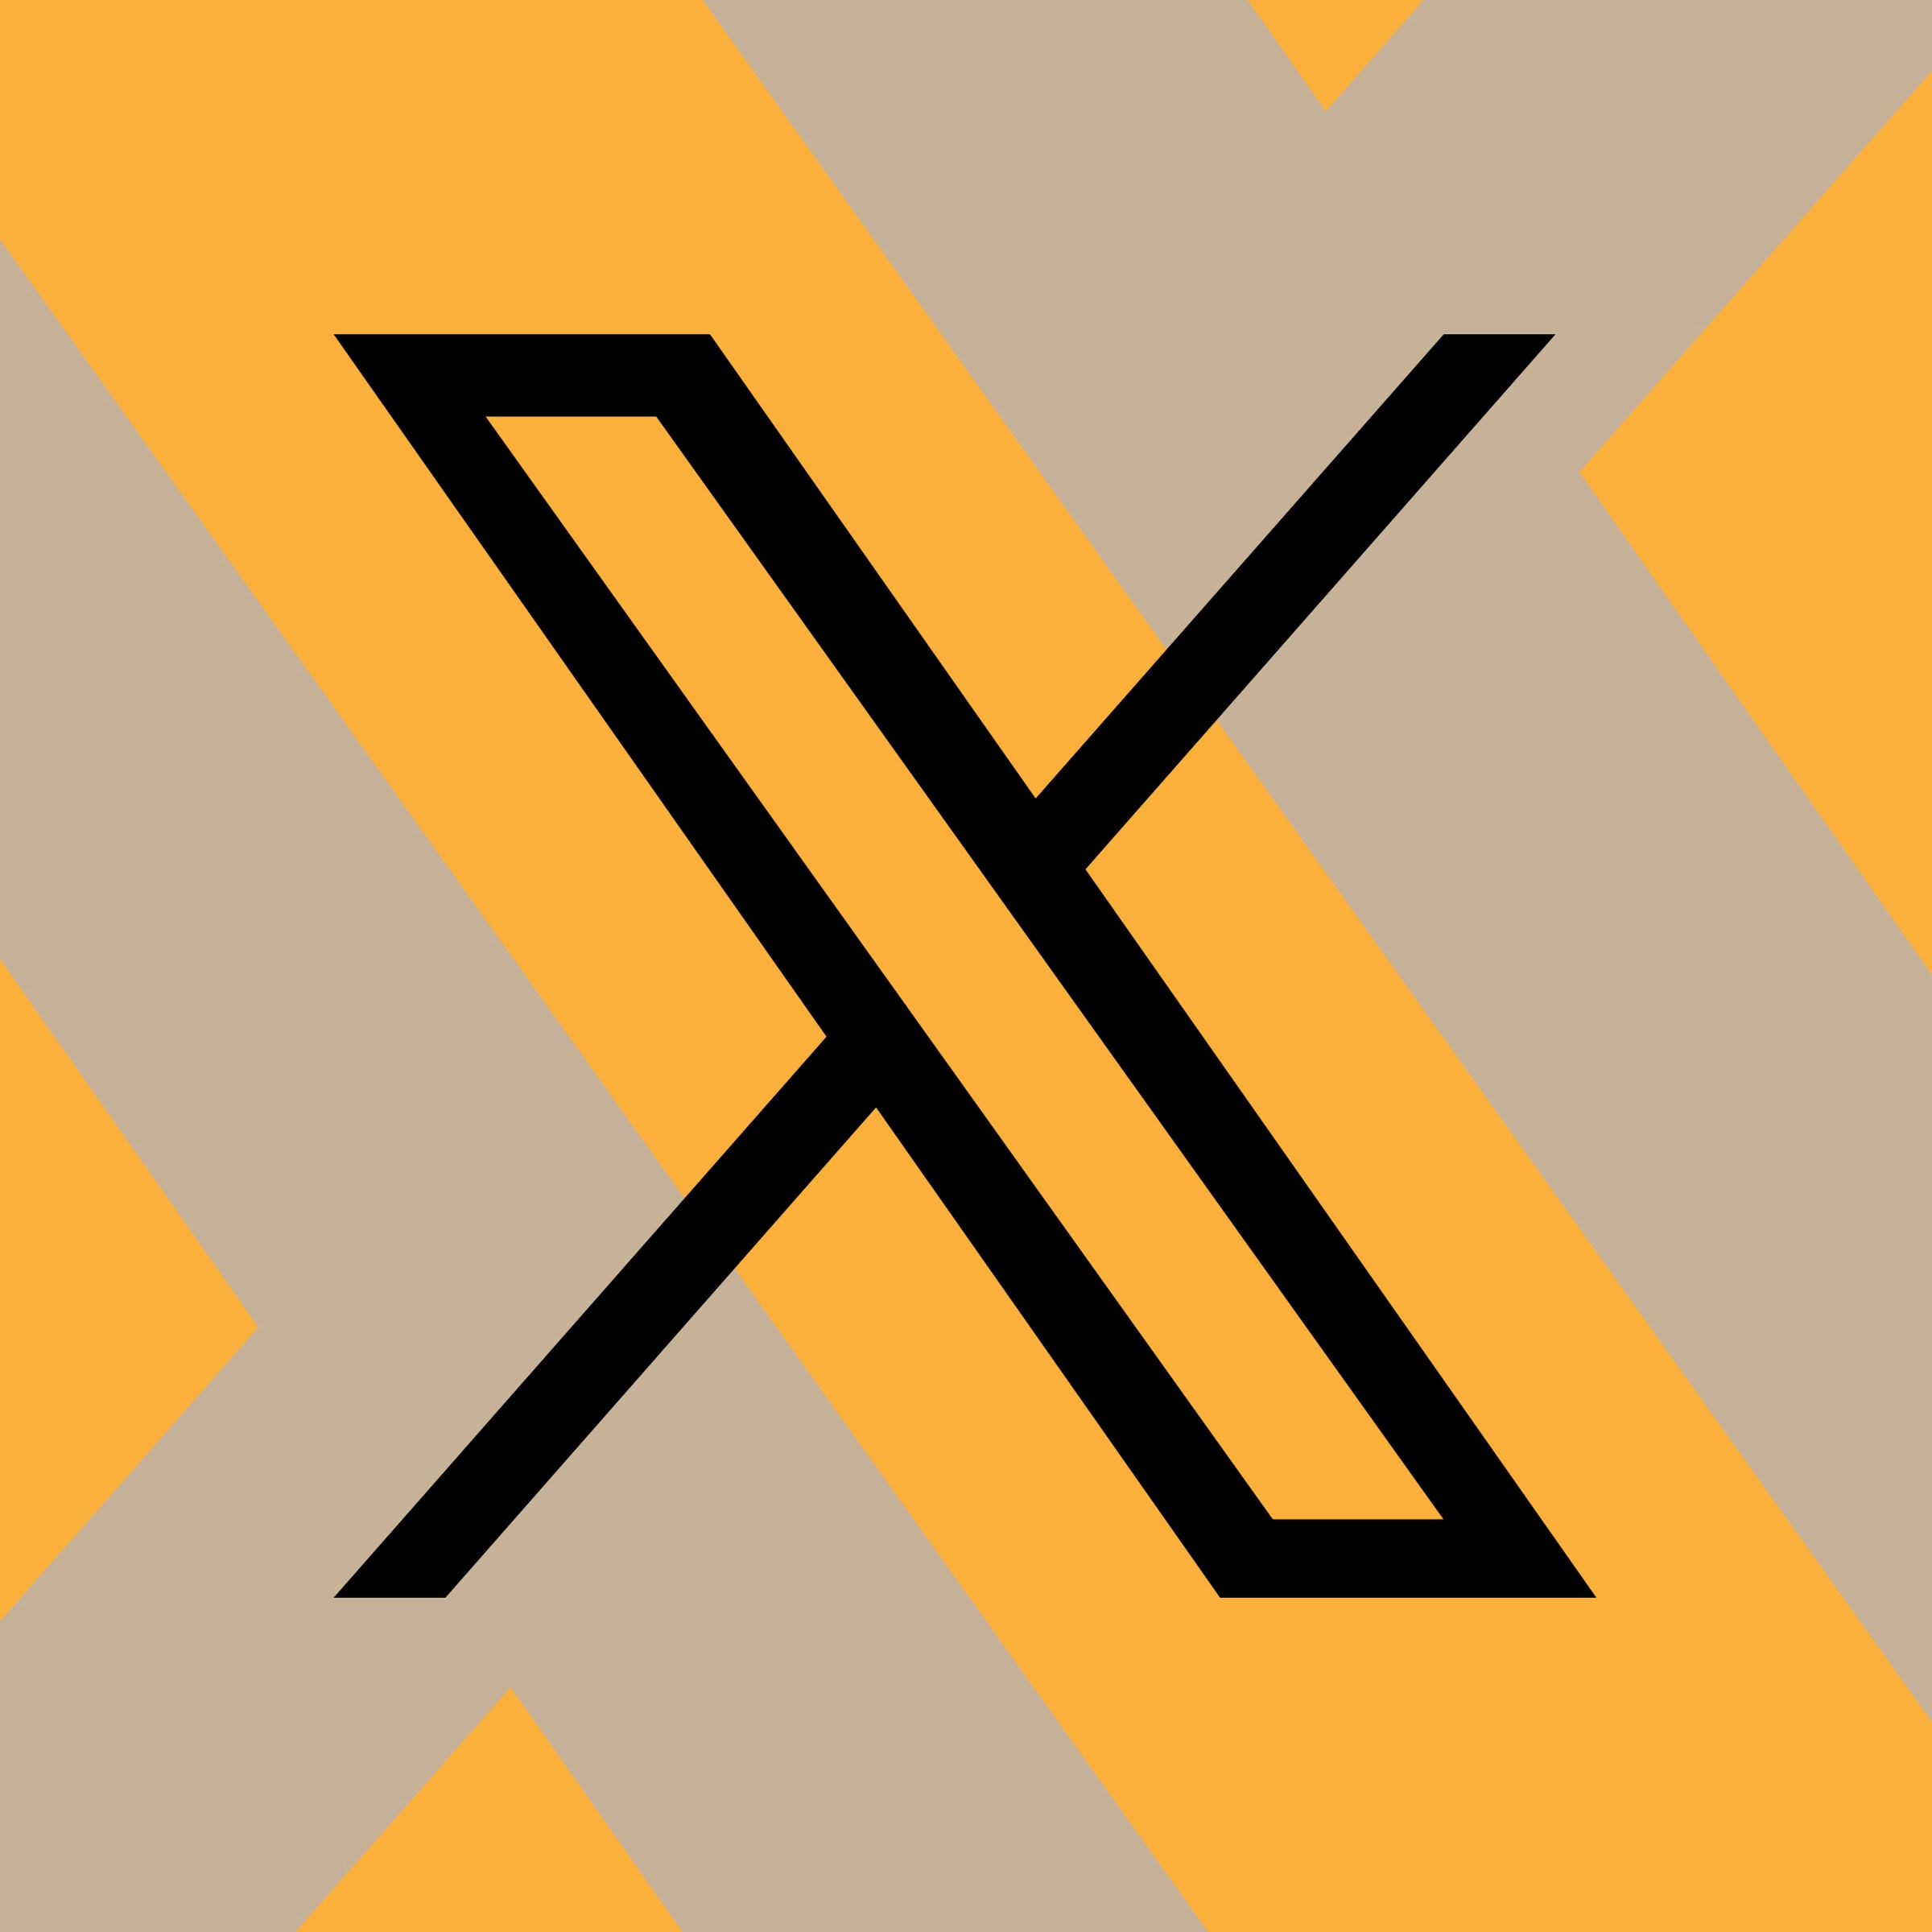 X logo on an orange background